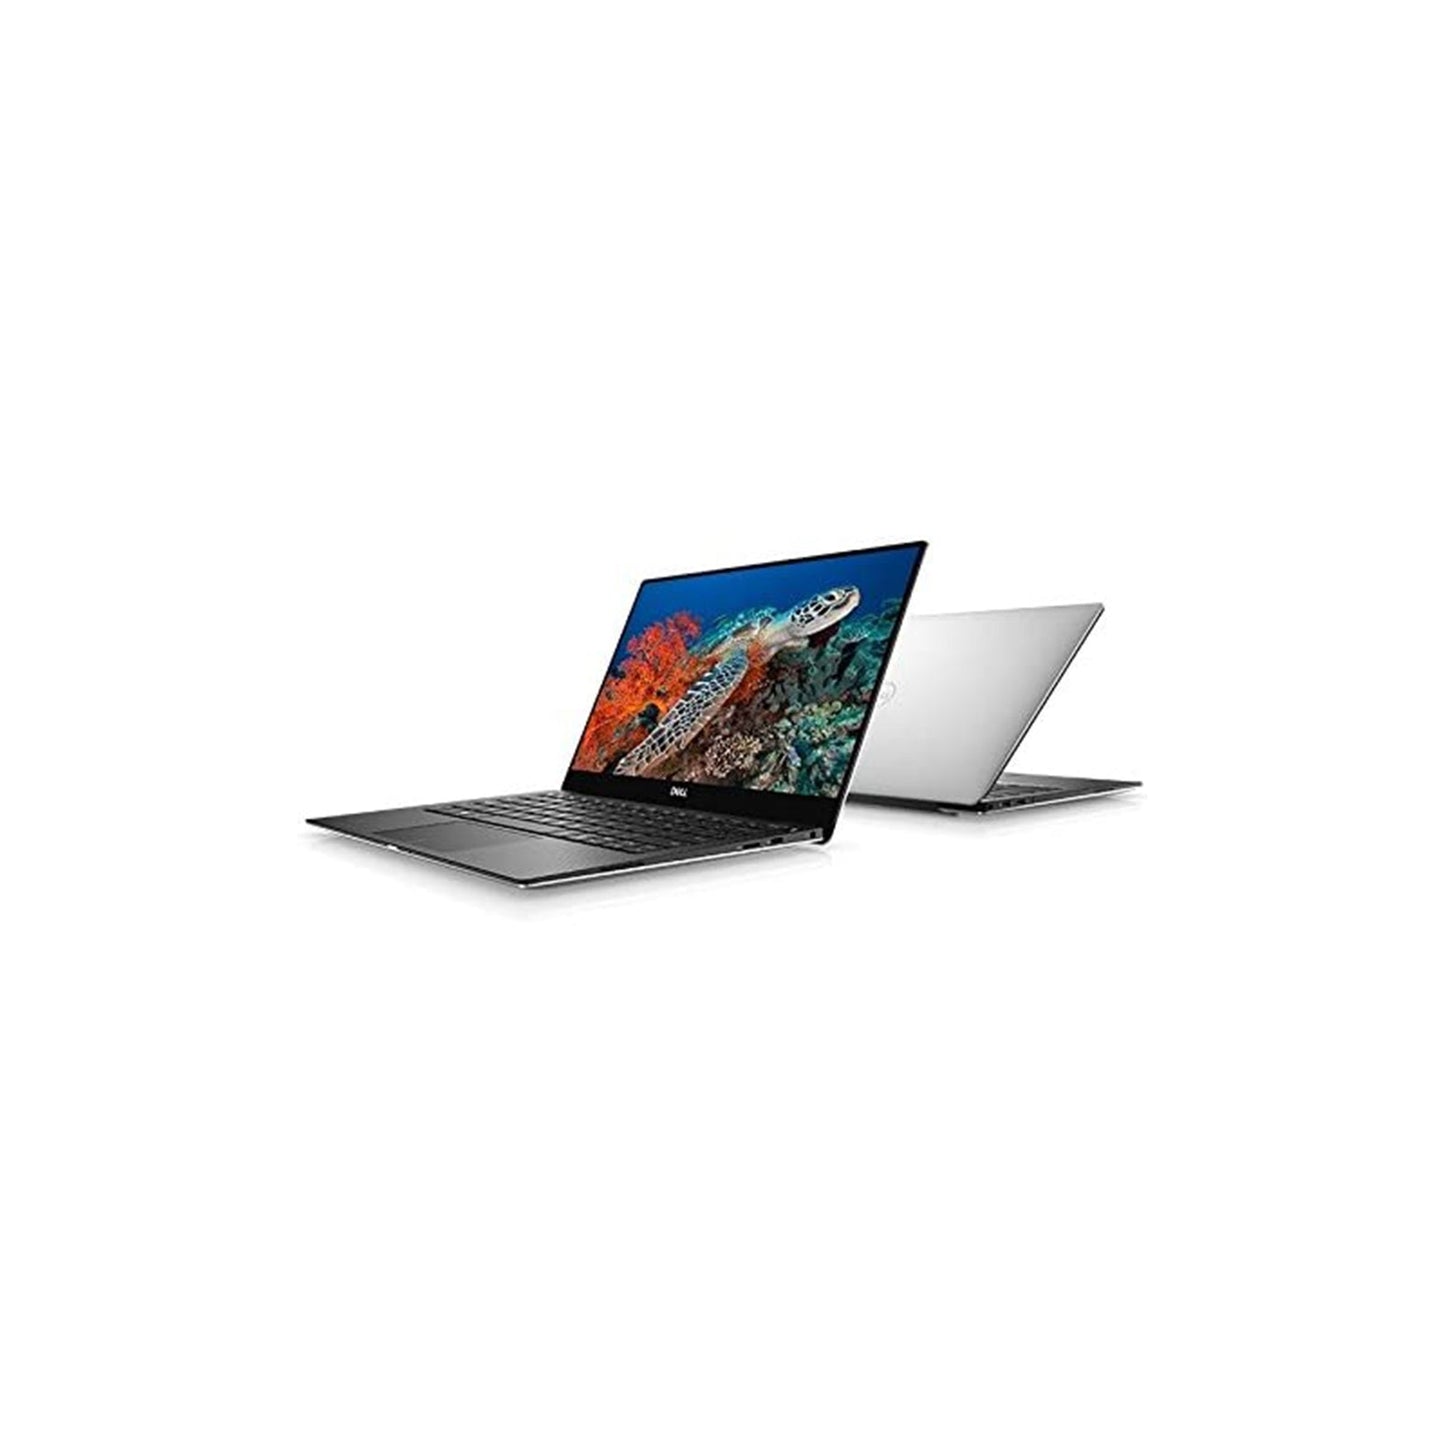 Dell XPS 13 9360 Touch  Laptop - Intel Core I7 Gen 7 - 8 GB - 256 GB SSD - Intel(R) UHD Graphics Iris Plus - Windows 10